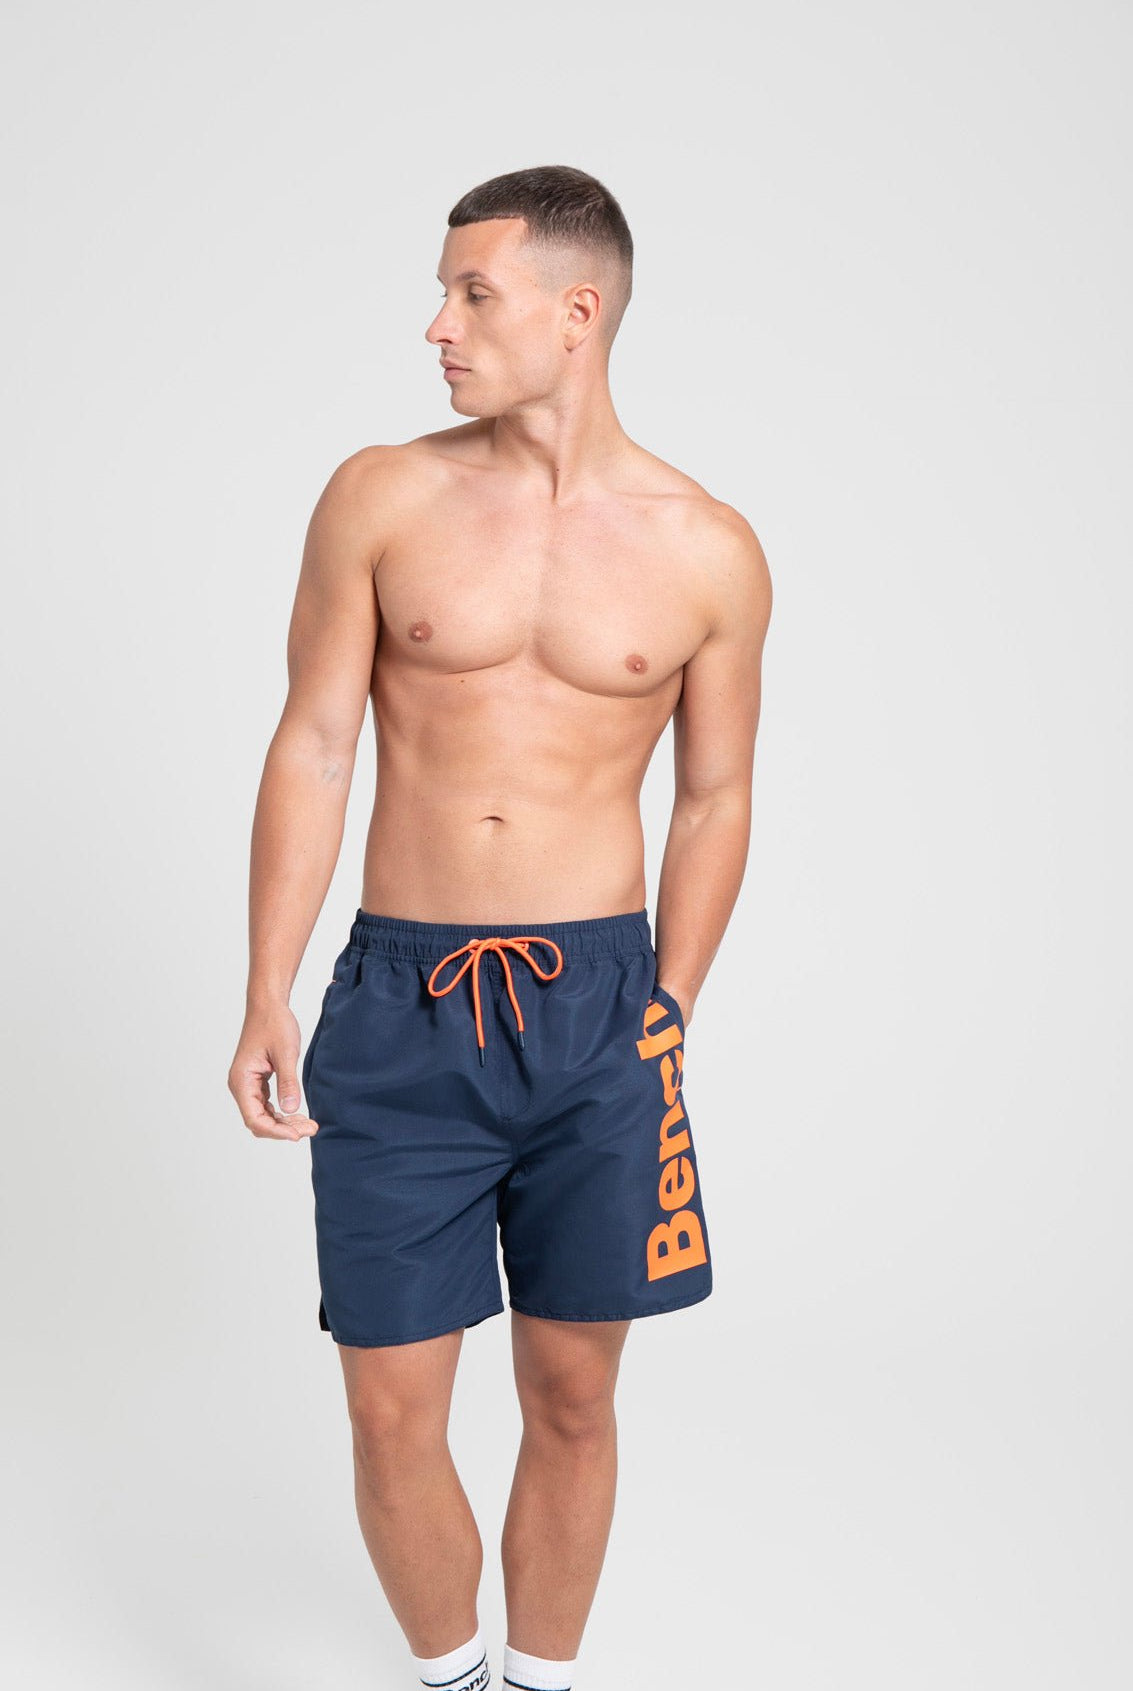 Mens 'TAHITI' Swim Shorts - NAVY - Shop at www.Bench.co.uk #LoveMyHood